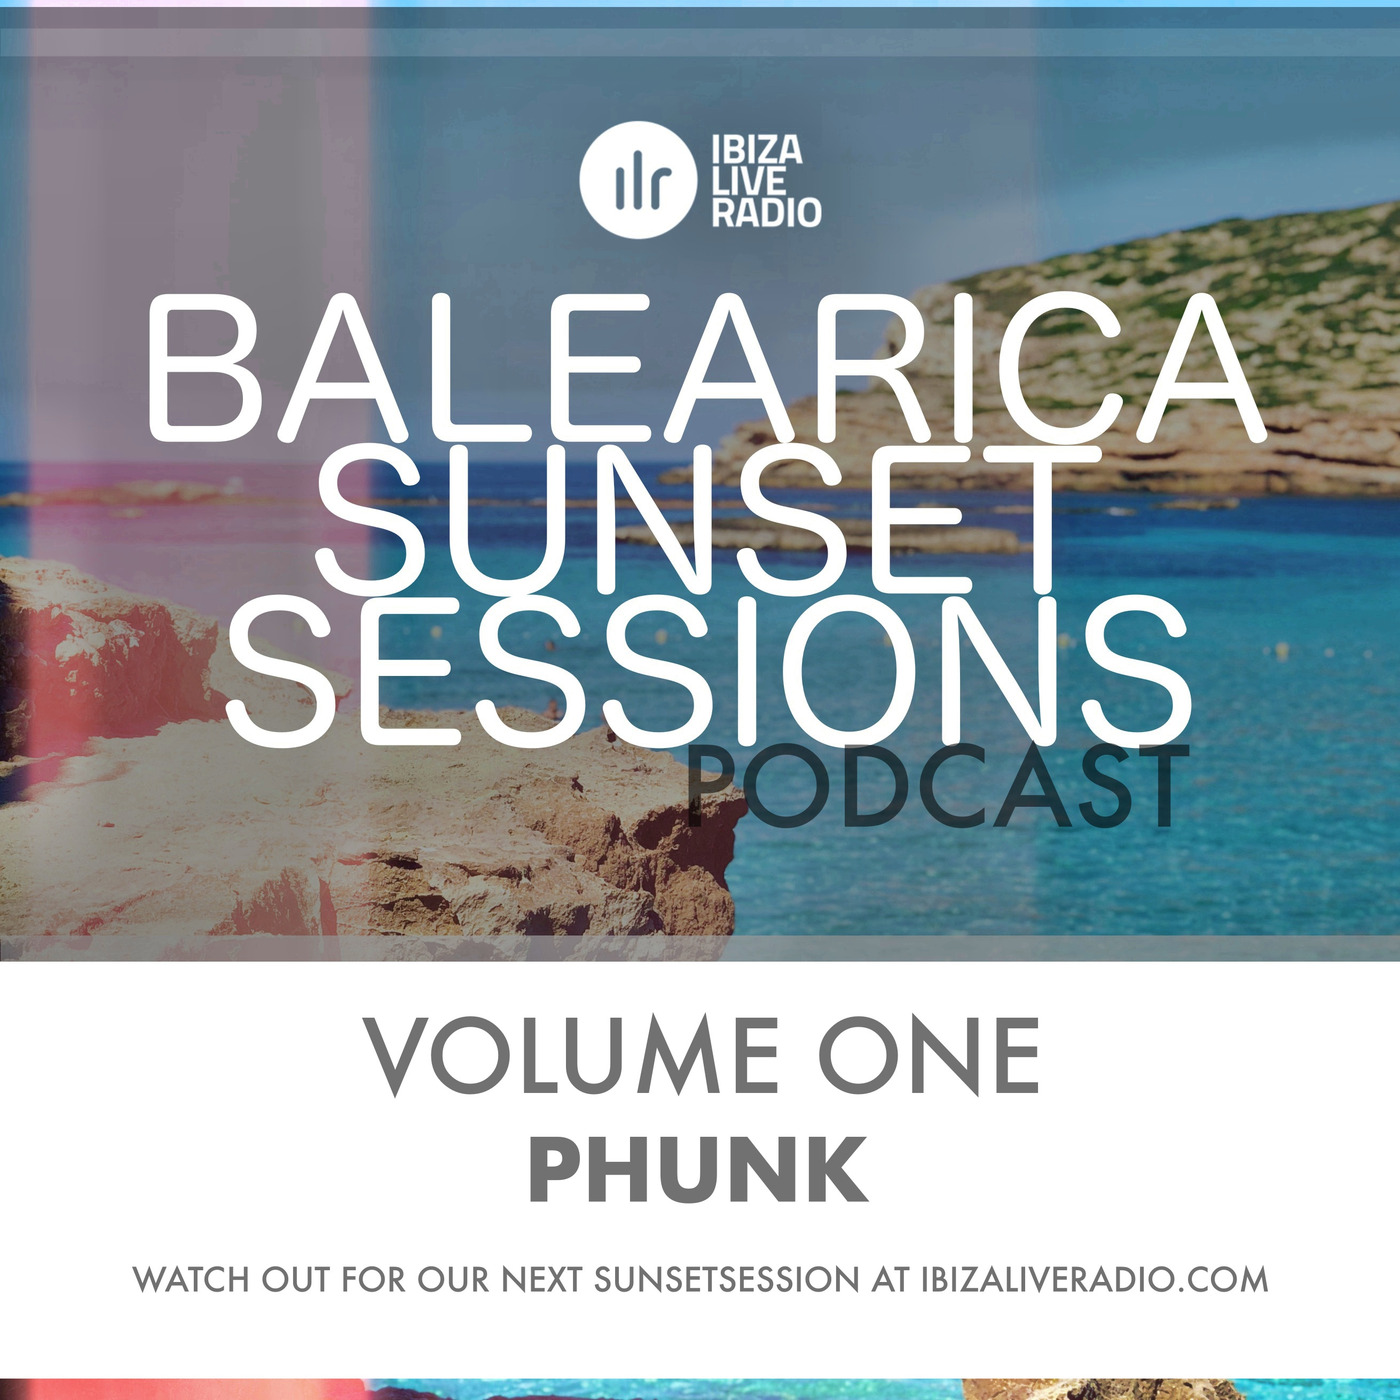 BALEARICA SUNSET SESSIONS VOLUME 1